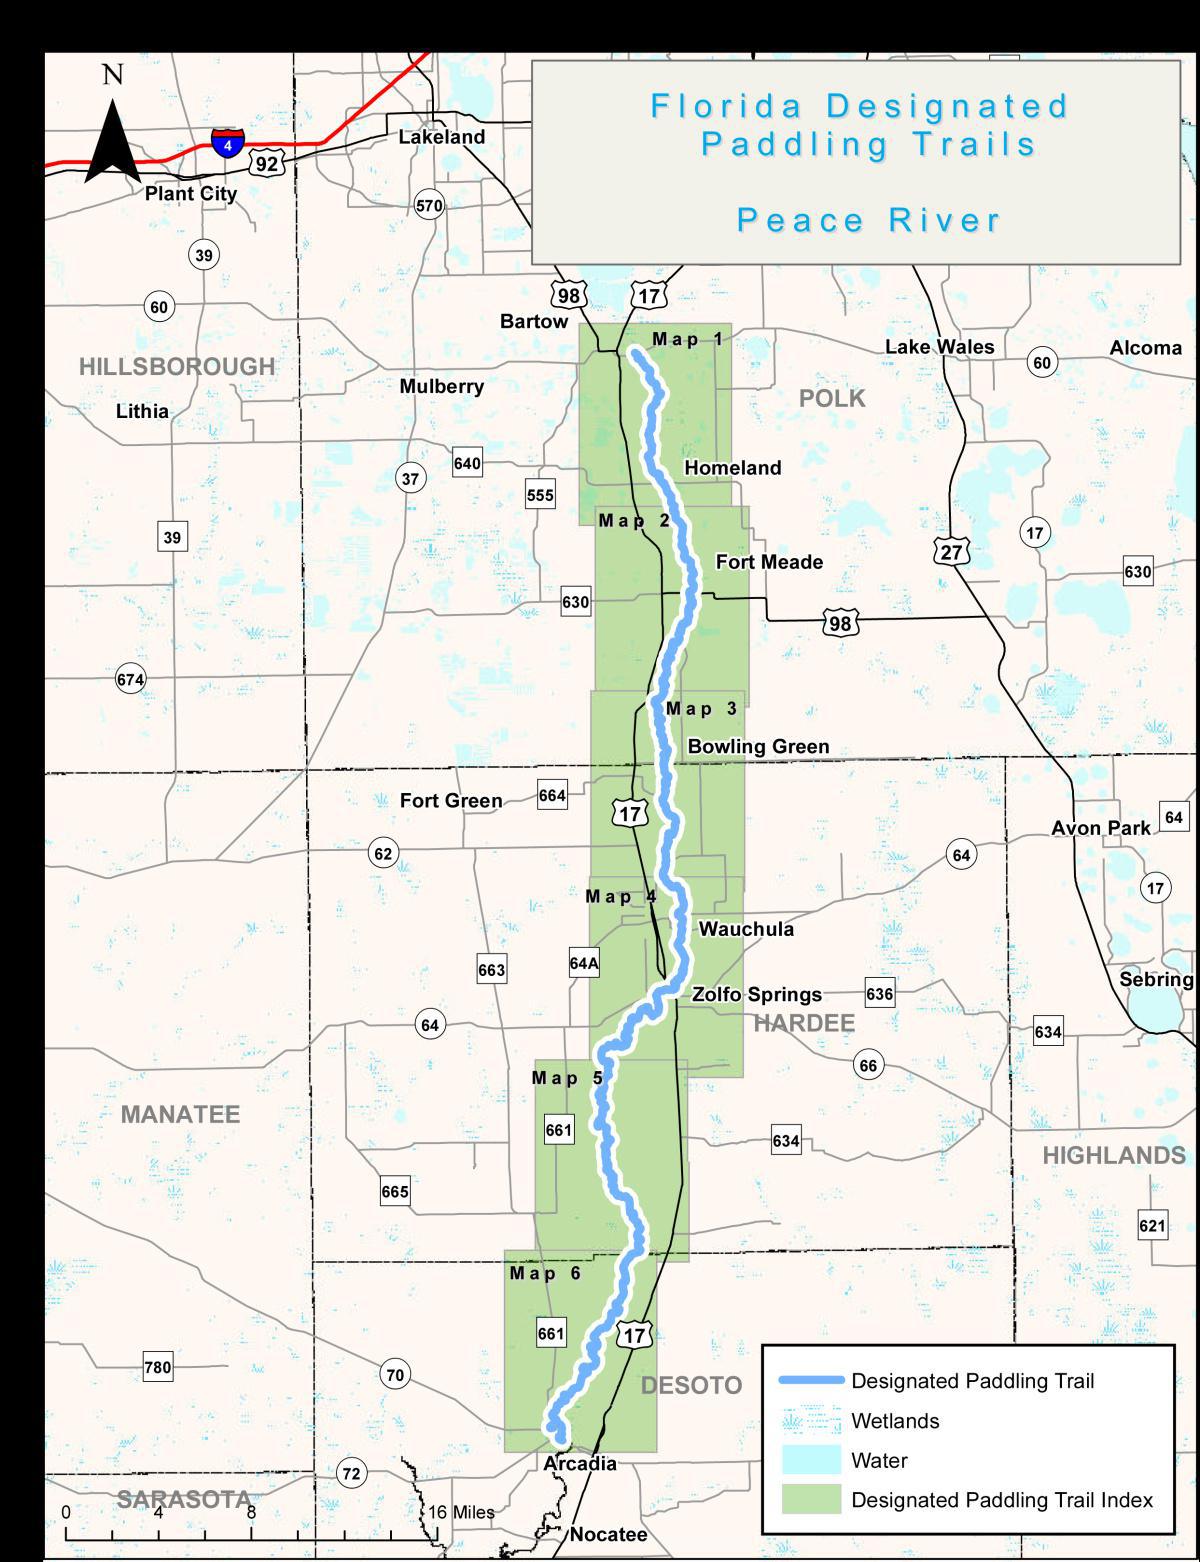 Peace River Paddling Trail